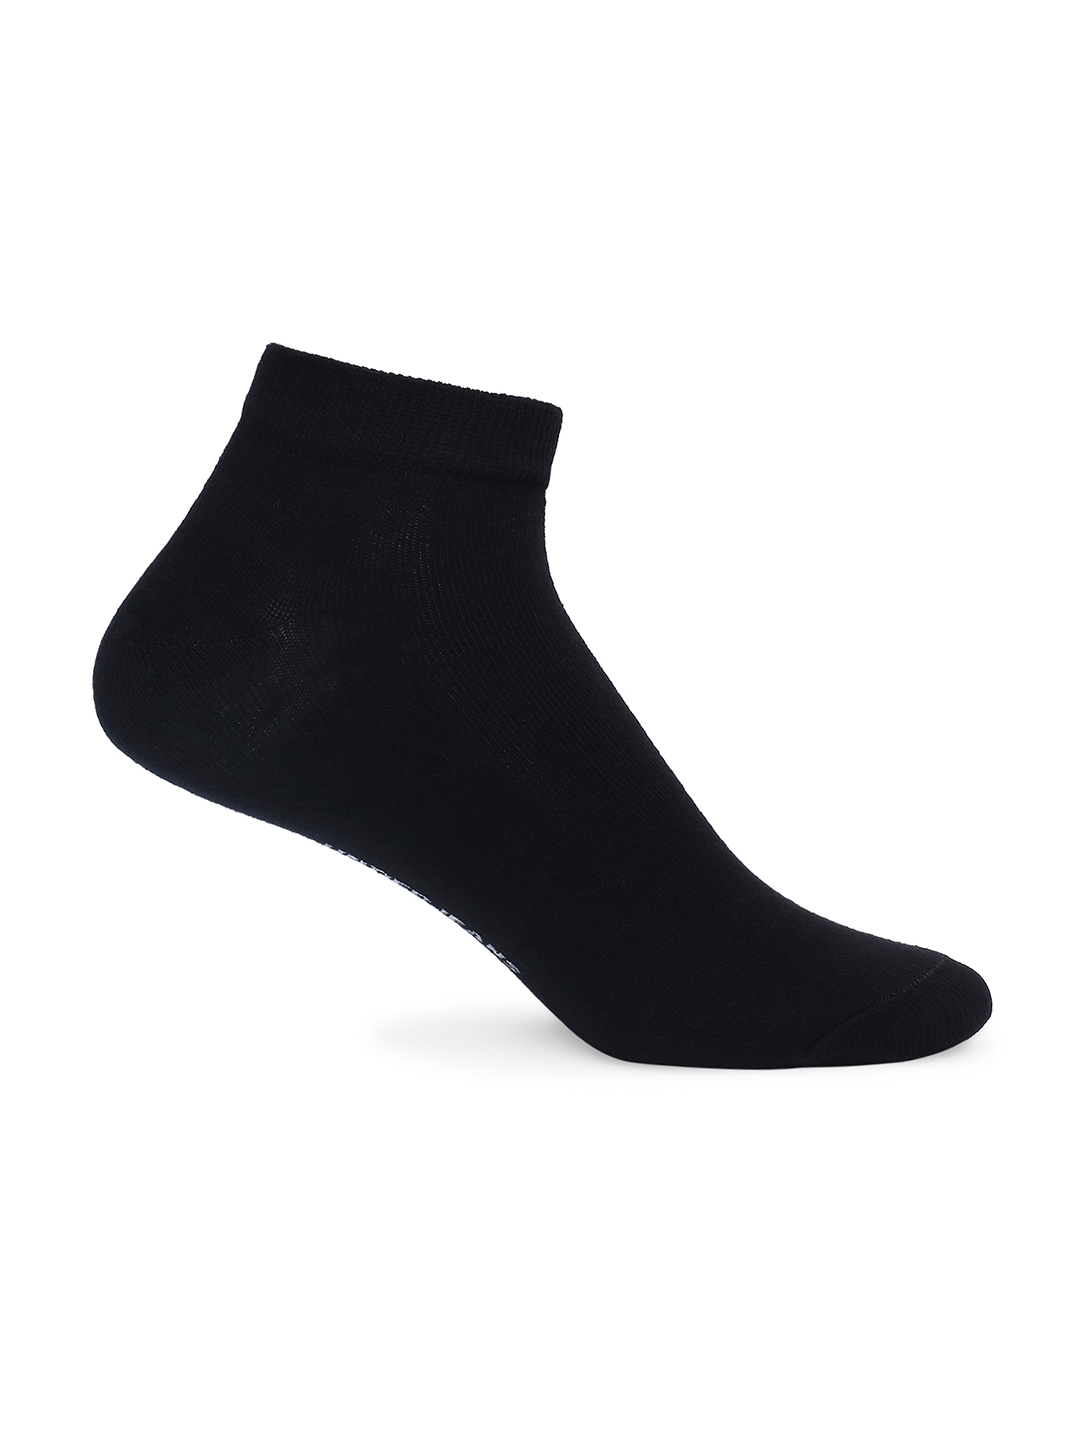 spykar | Underjeans By Spykar Men Grey Melange & Black Cotton Blend Sneaker Socks - Pack Of 2 1